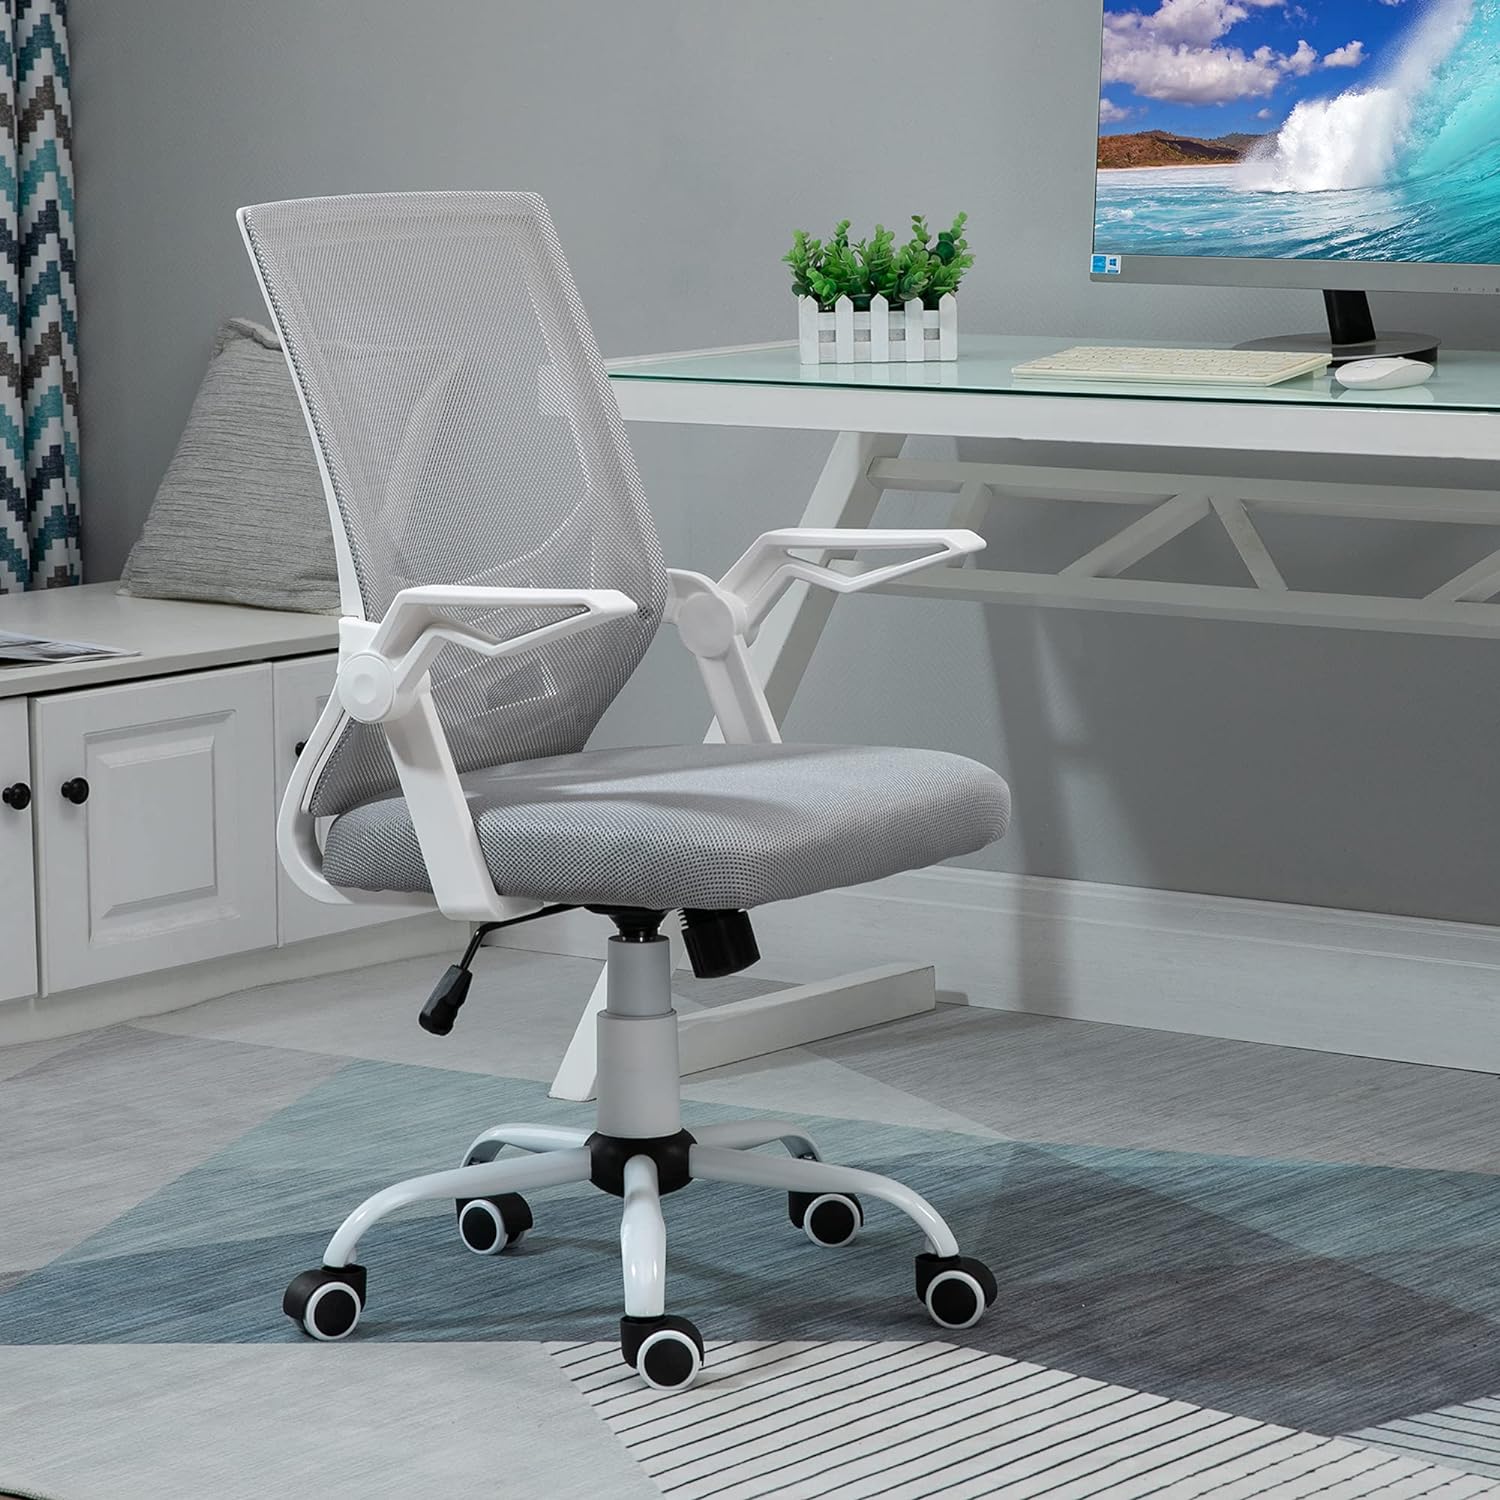 ProperAV Extra Ergonomic Adjustable Office Chair with Flip-up Arm & Lumbar Back Support - maplin.co.uk